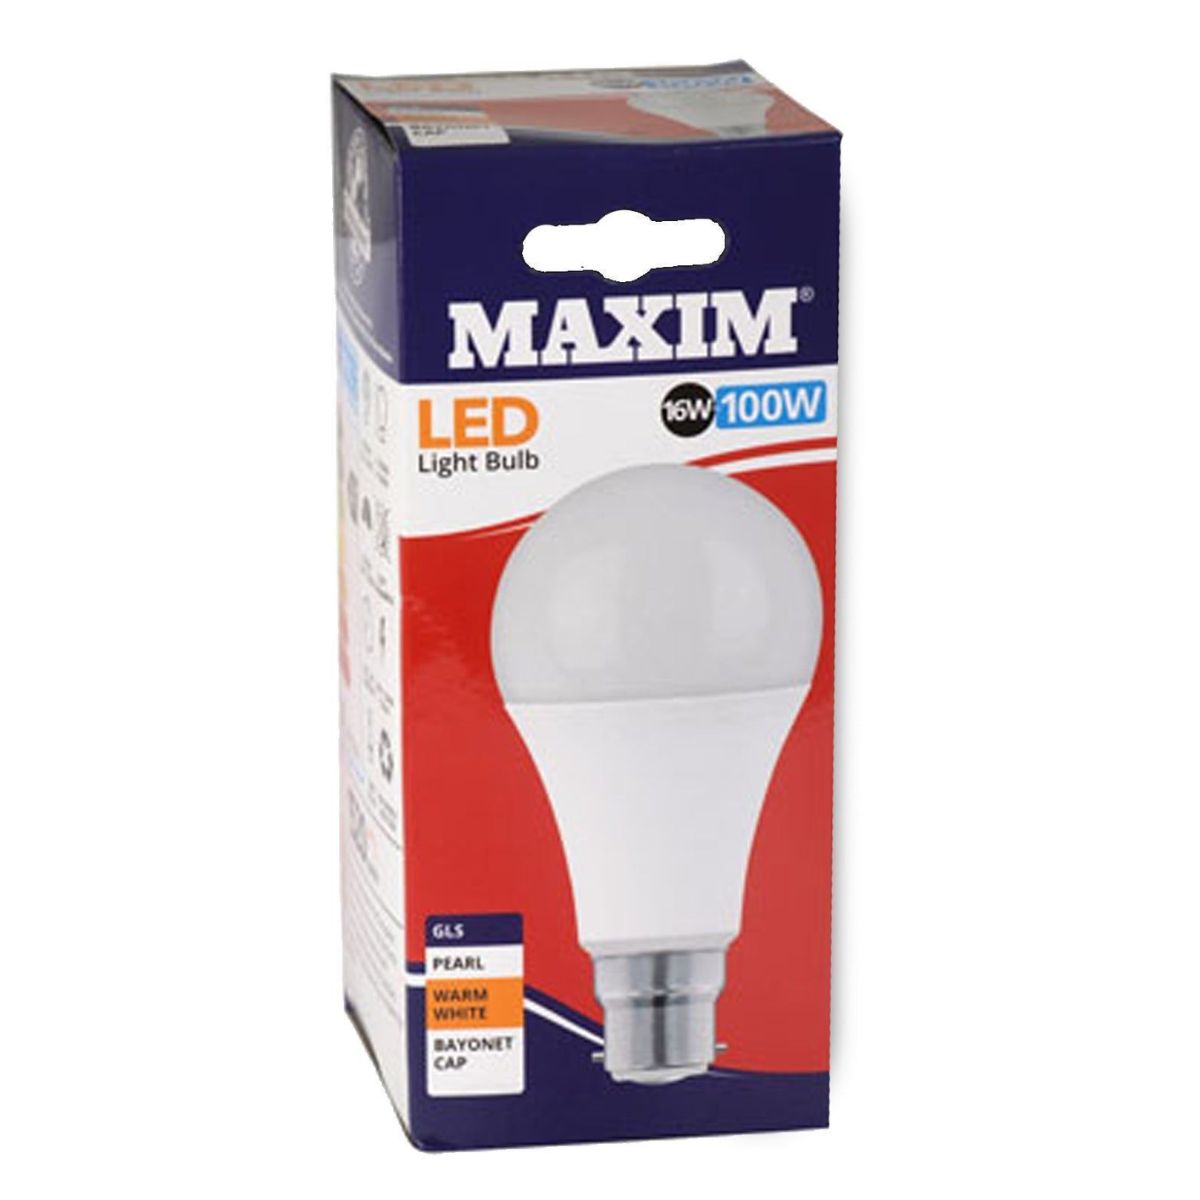 Maxim - Warm White Led Bulb 16w=100w - 1pcs in white packaging.